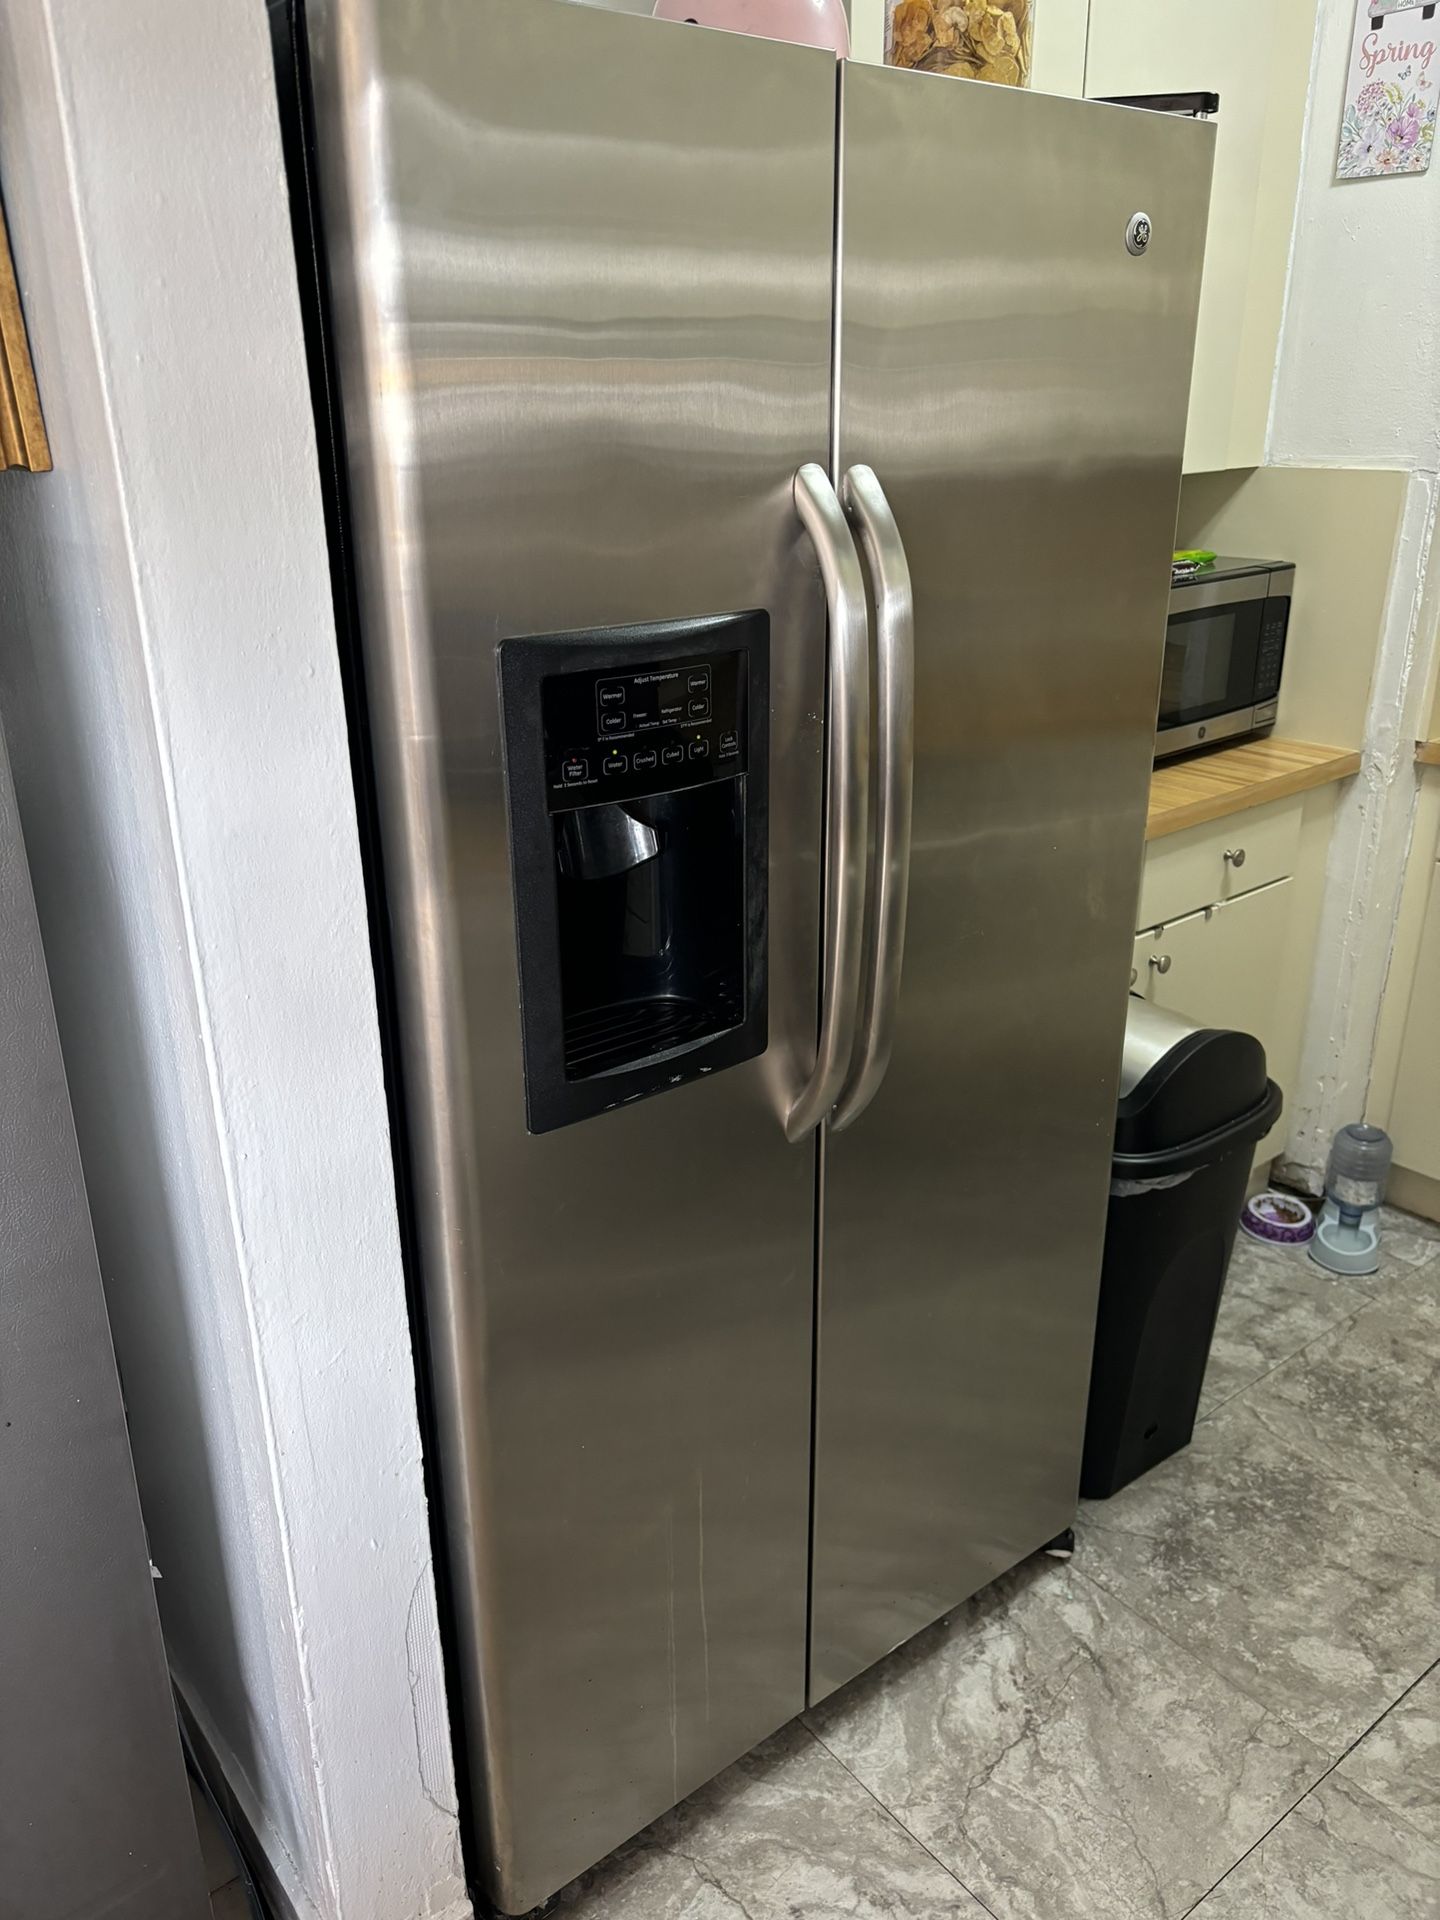 Refrigerator - general electric $250